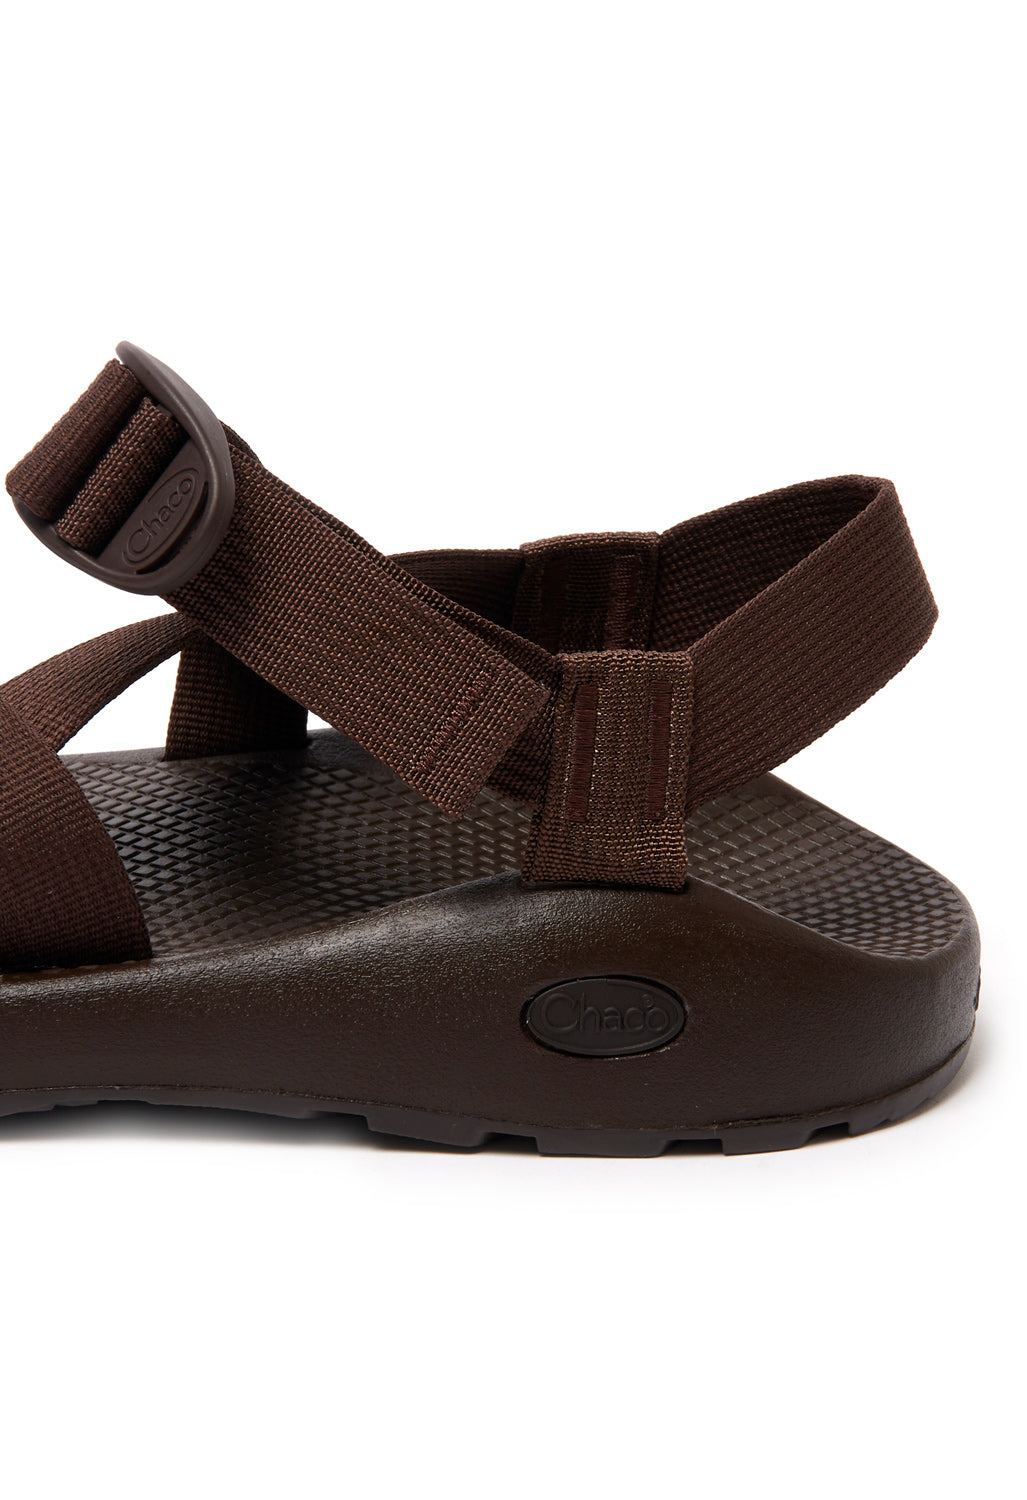 Chaco Men's Z1 Classic Sandals - Java